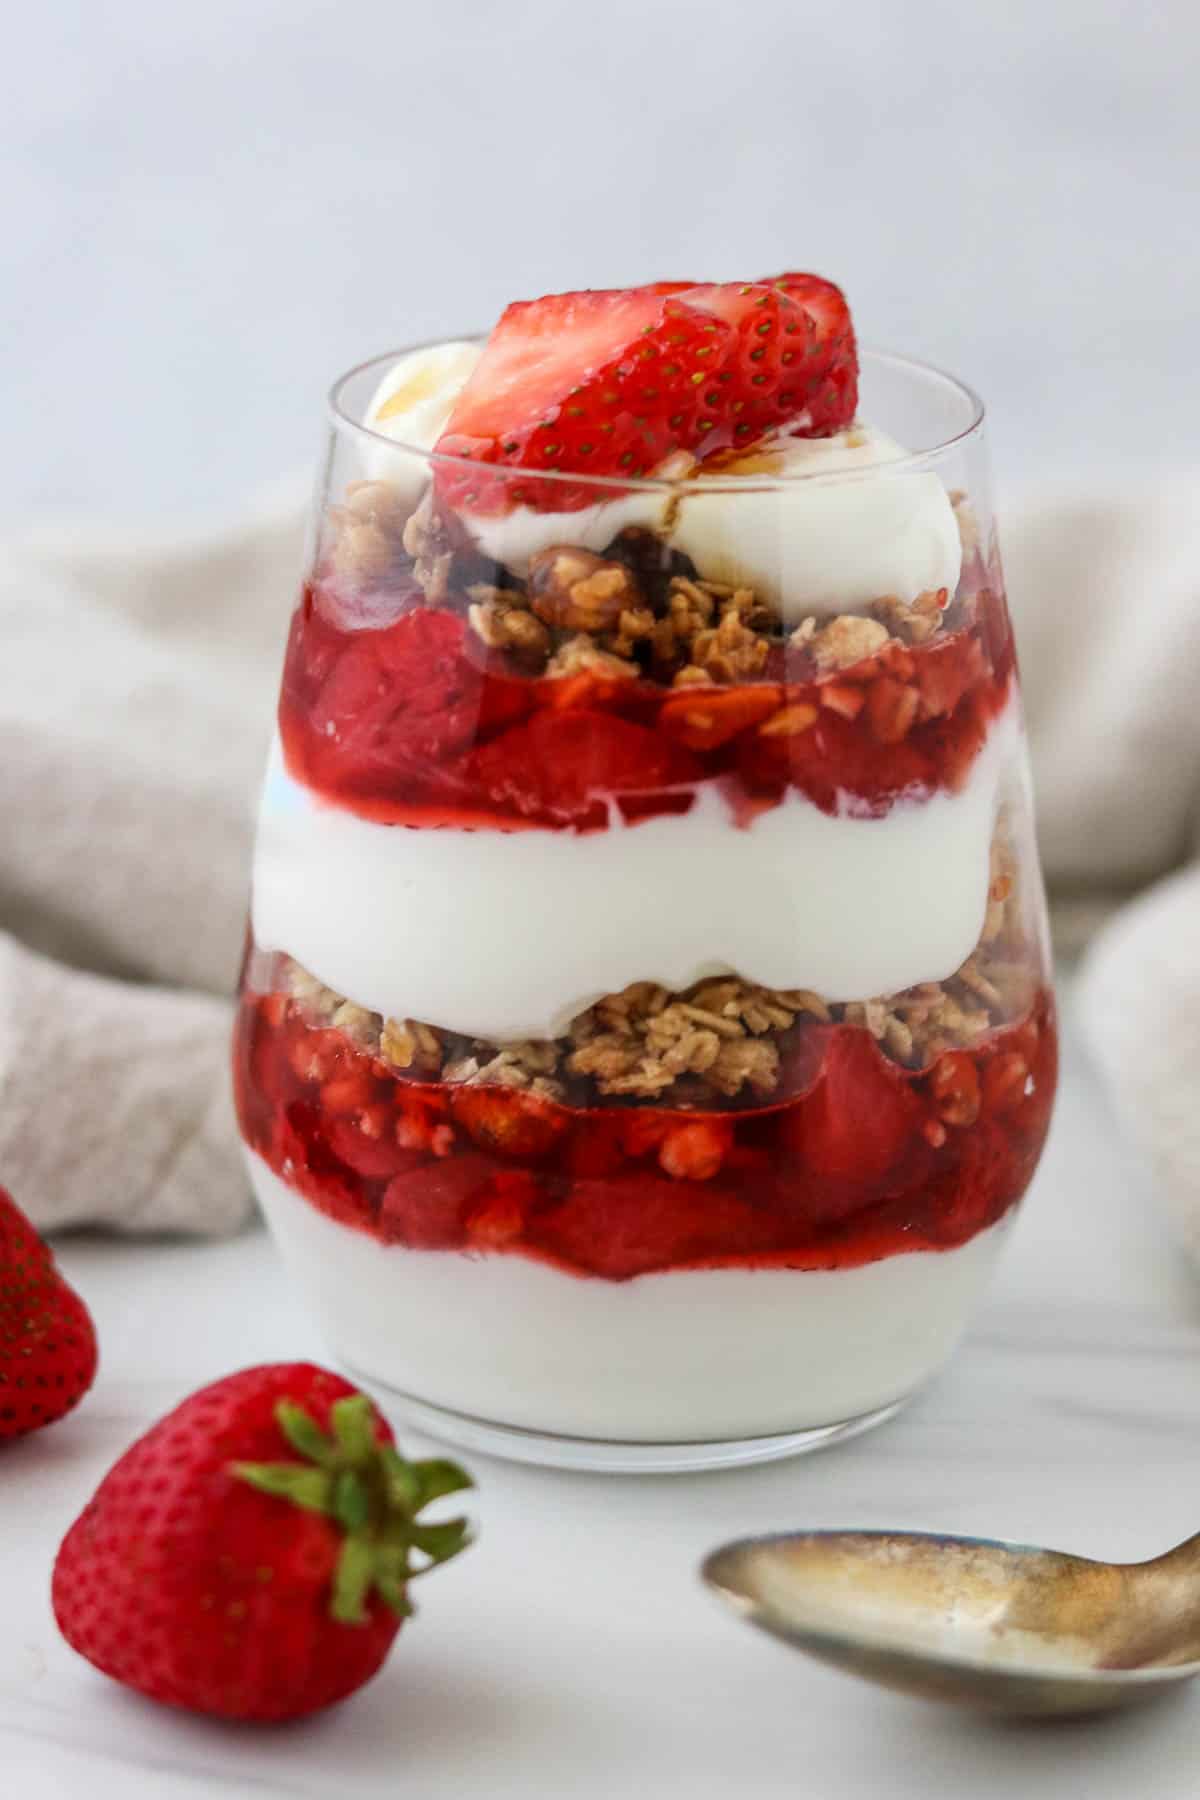 Strawberry granola and yogurt parfait next to a spoon and fresh strawberries.